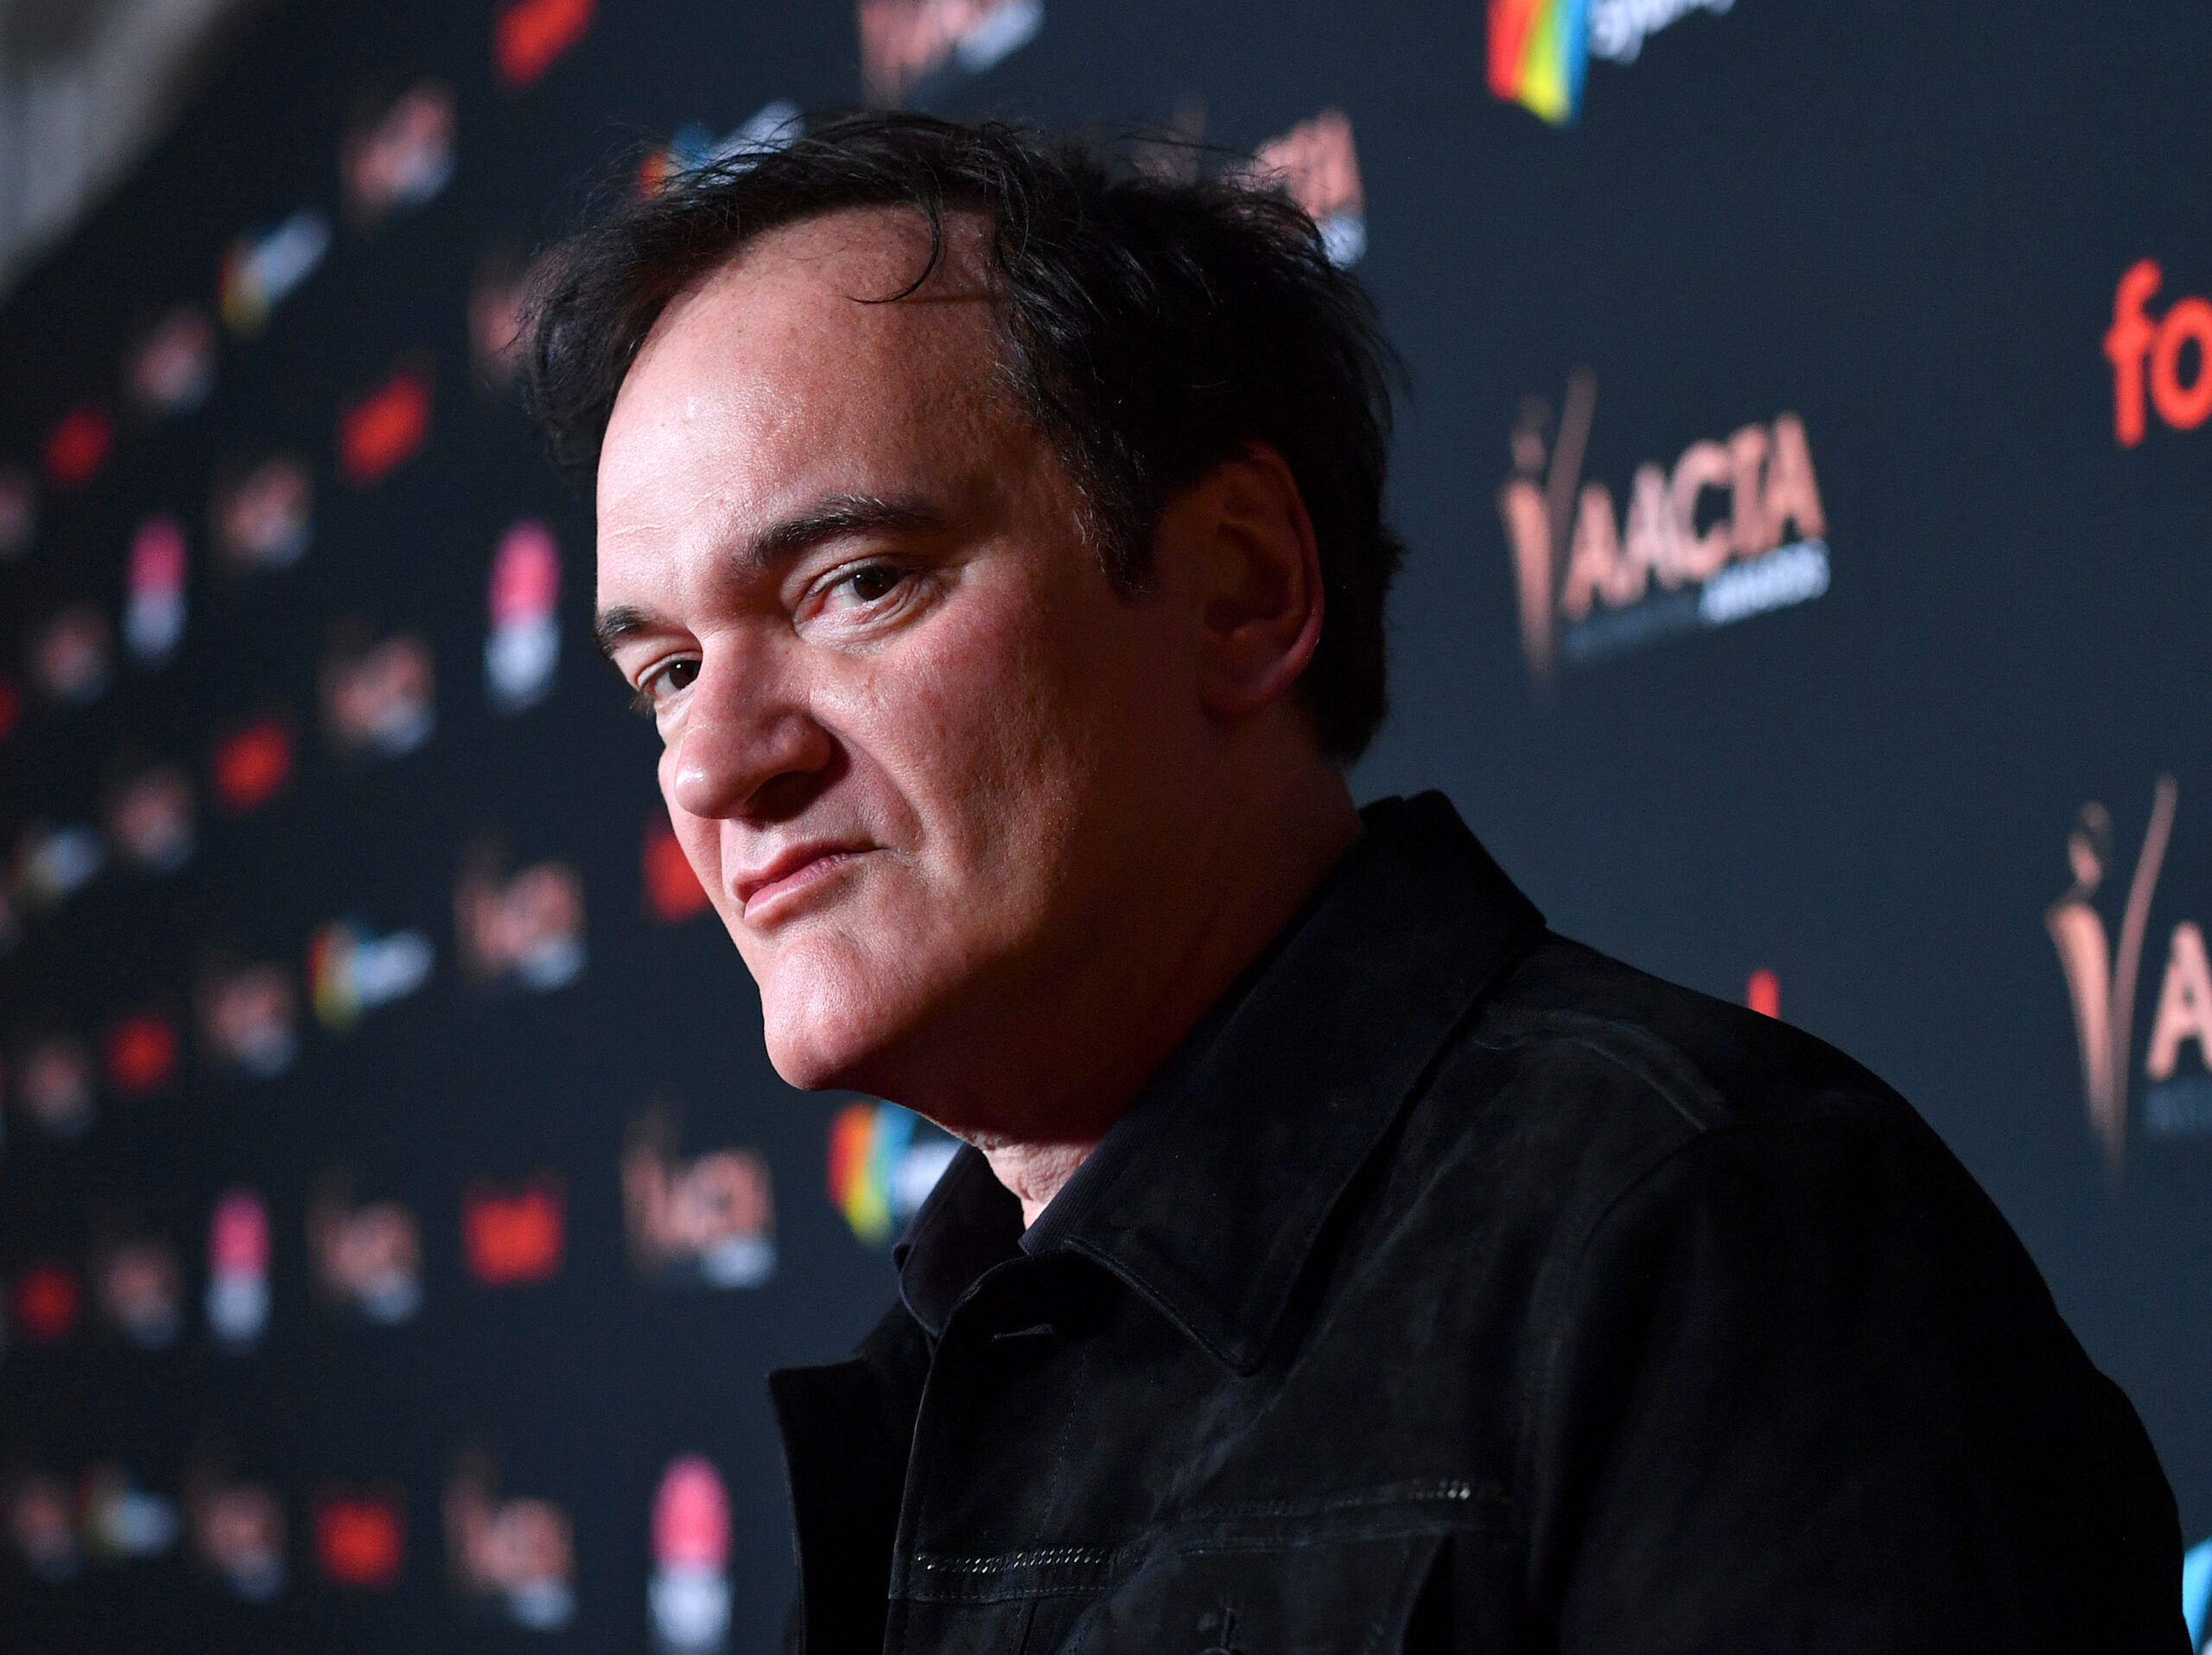 Tarantino won’t cross that bridge in his movies.